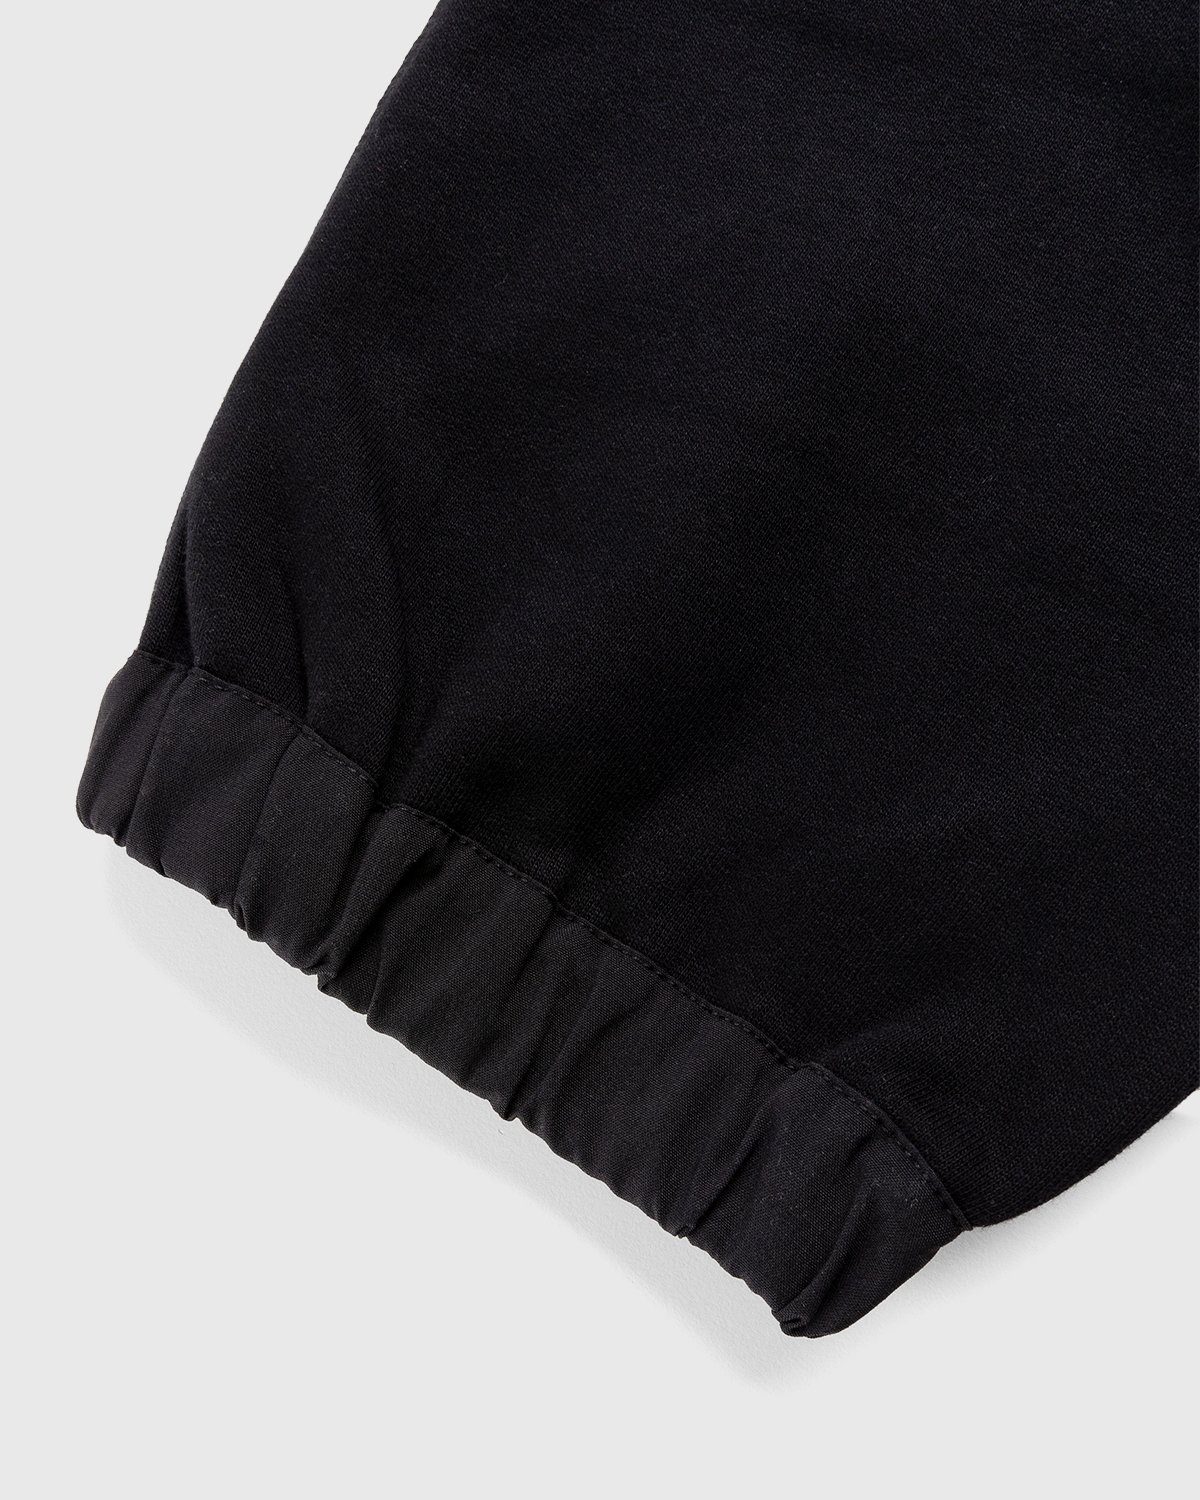 ACRONYM - P39-PR Pants Black - Clothing - Black - Image 5